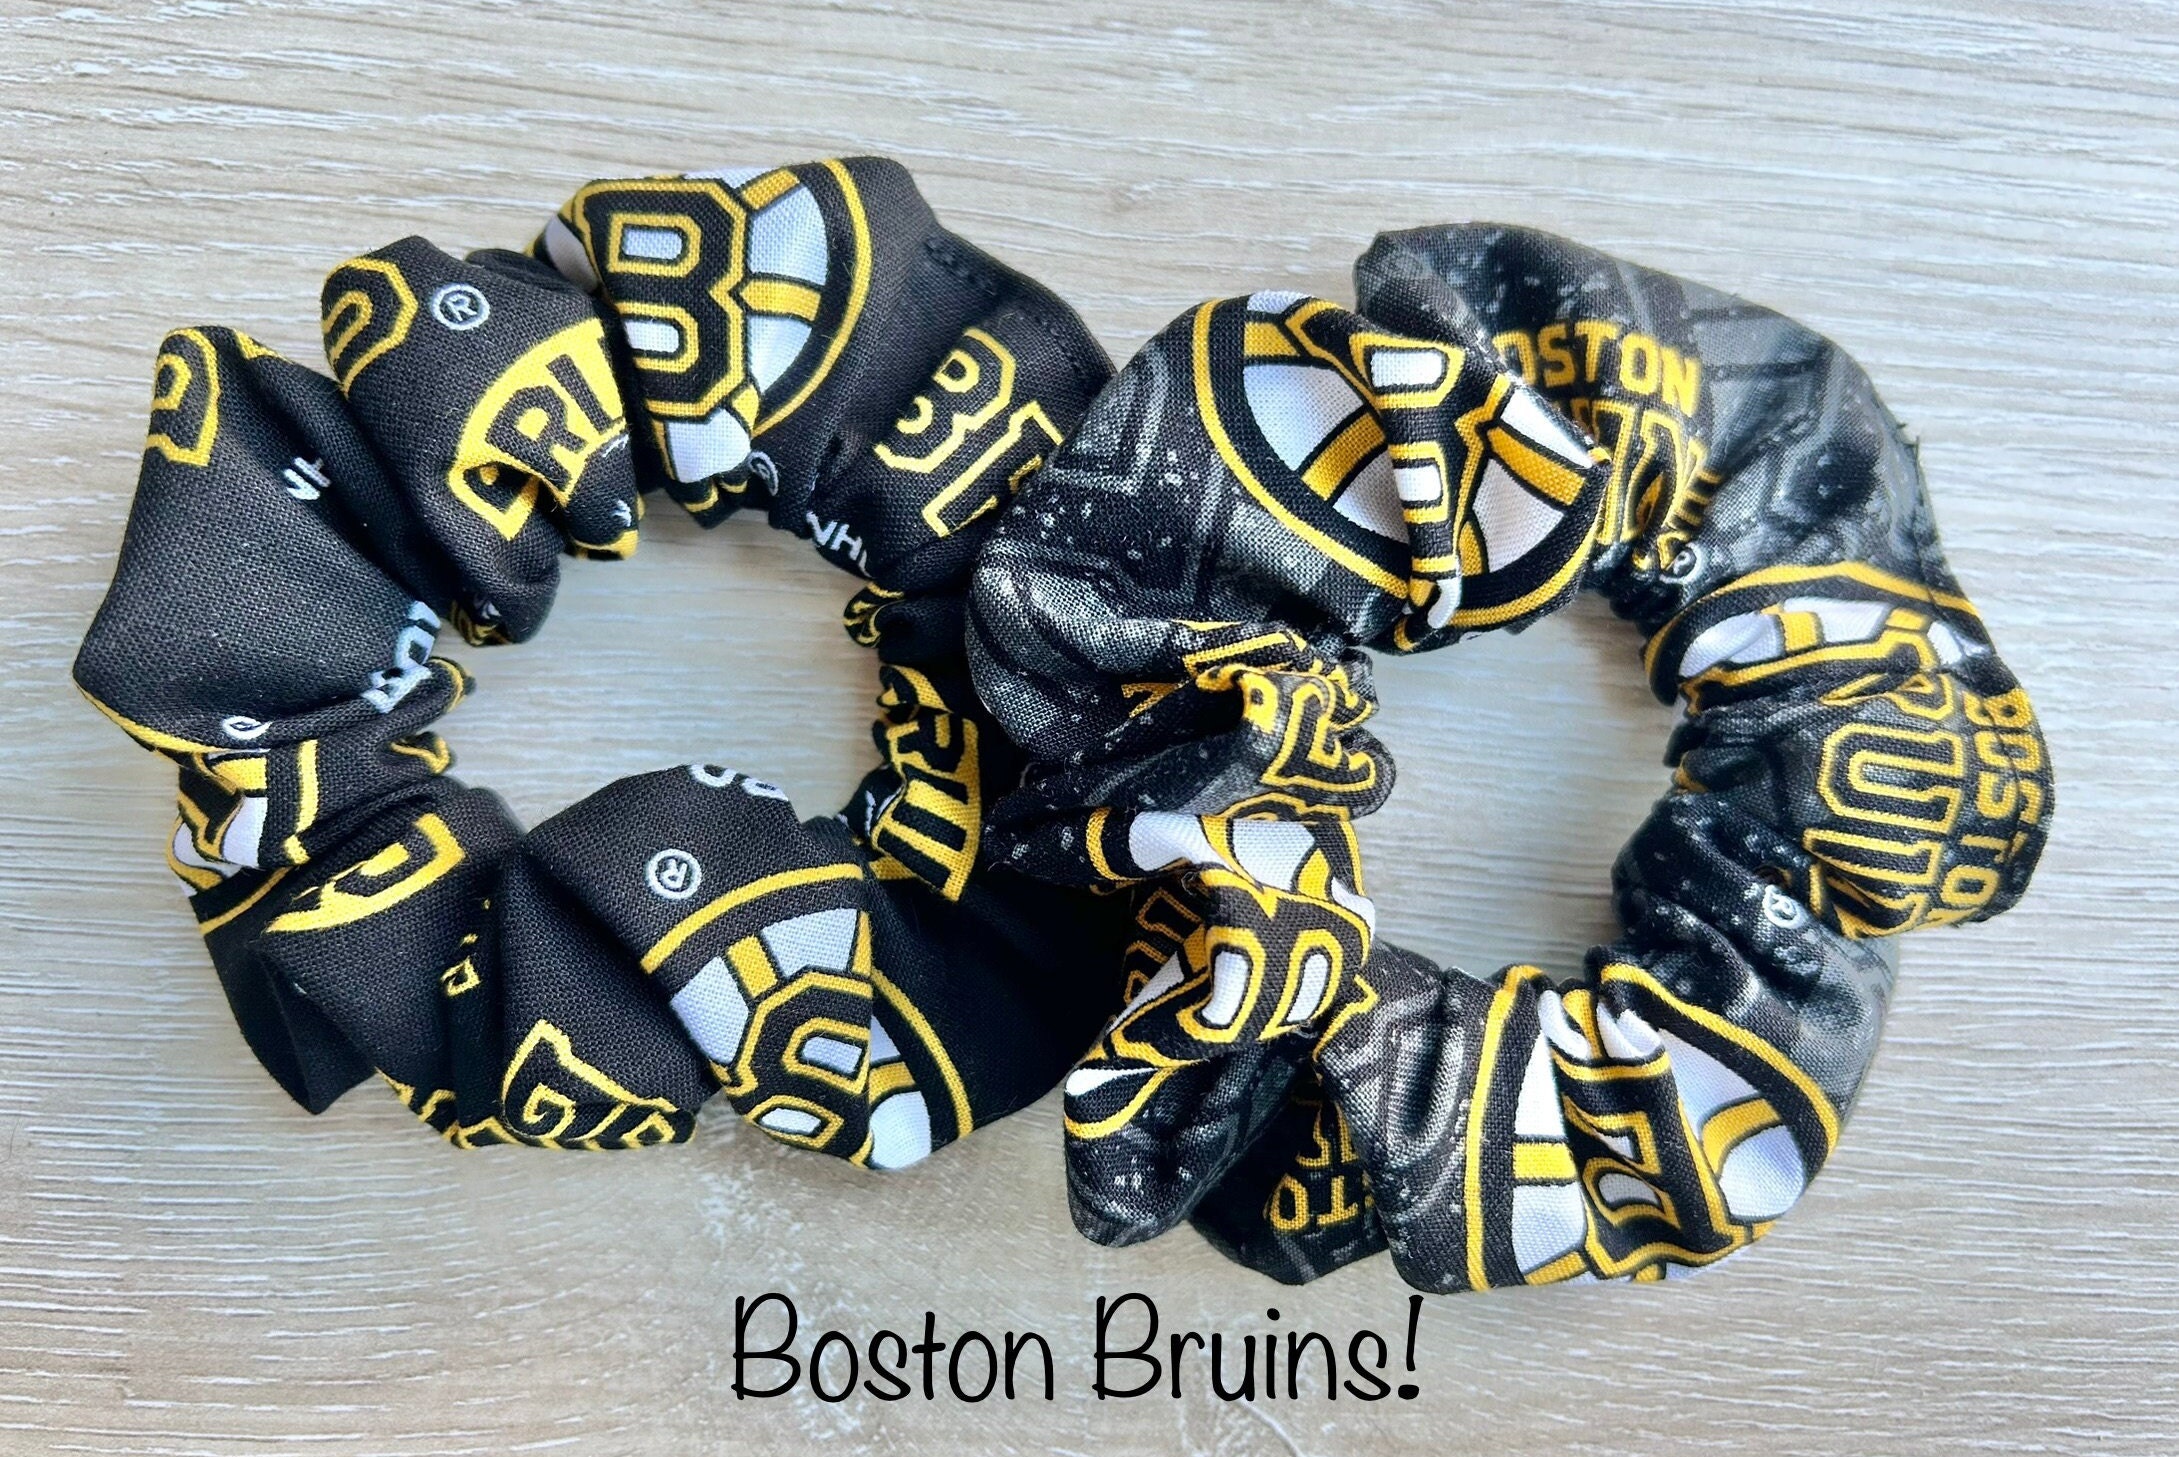 Boston Bruins NHL Flower Hawaiian Shirt Special Gift For Men And Women Fans  - Freedomdesign